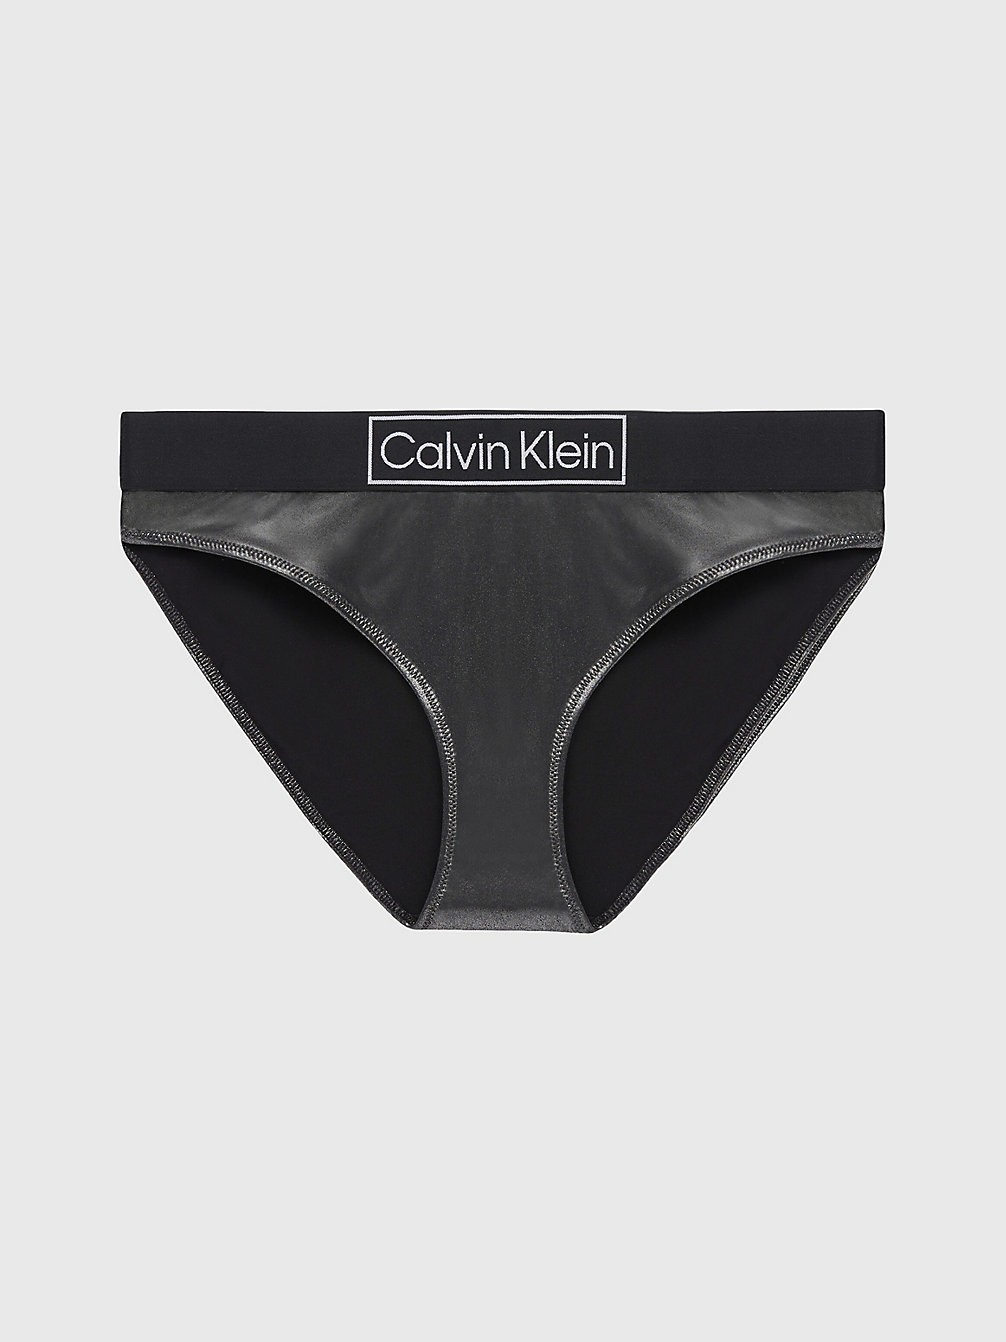 Bas De Bikini - Core Festive > PVH BLACK > undefined femmes > Calvin Klein